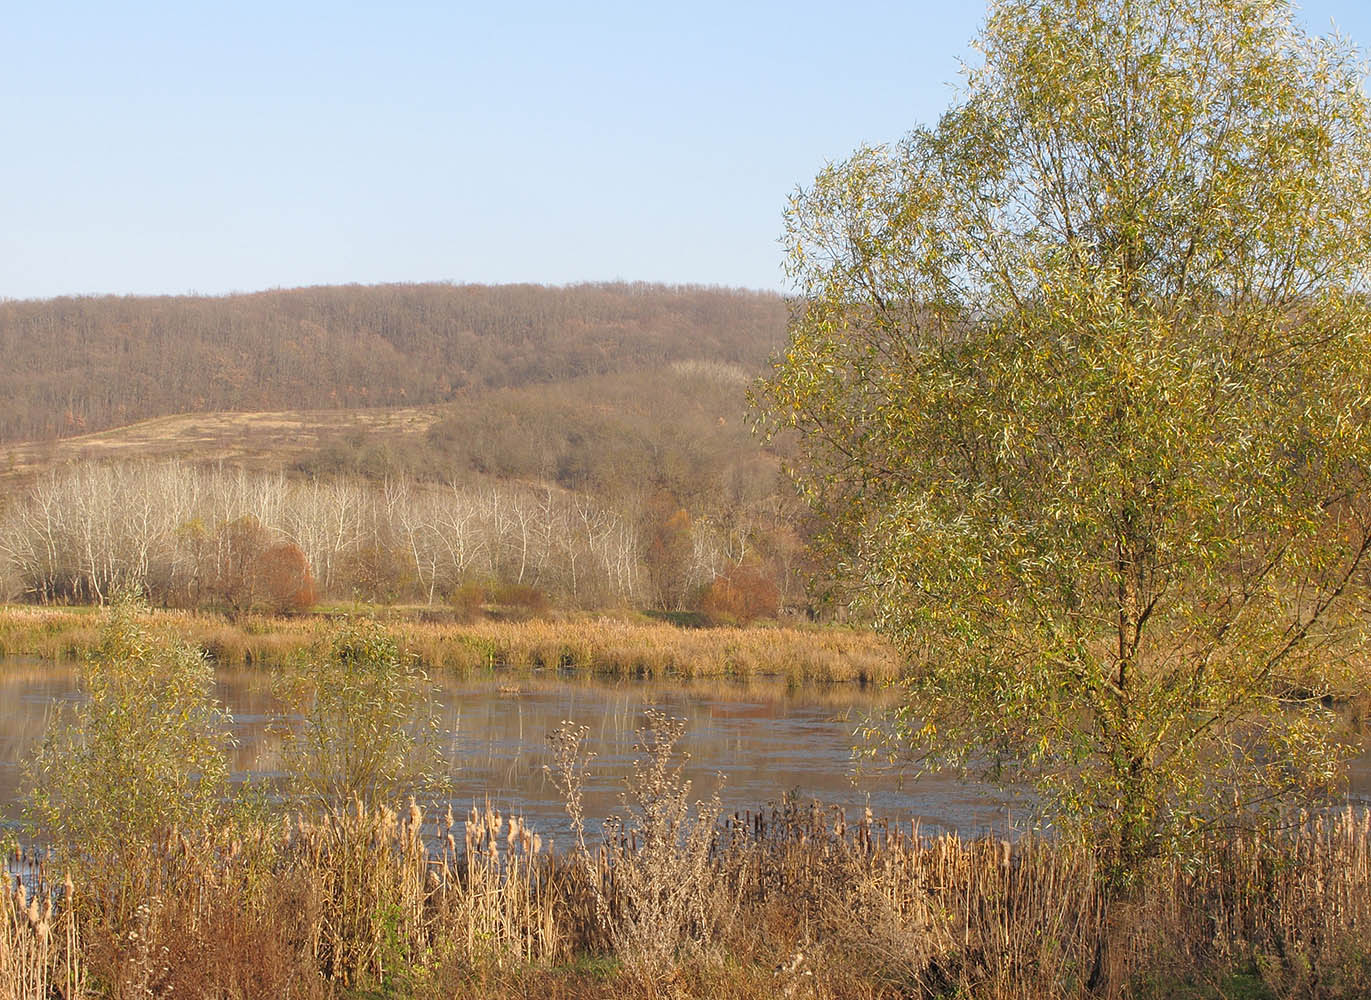 Шибик, image of landscape/habitat.